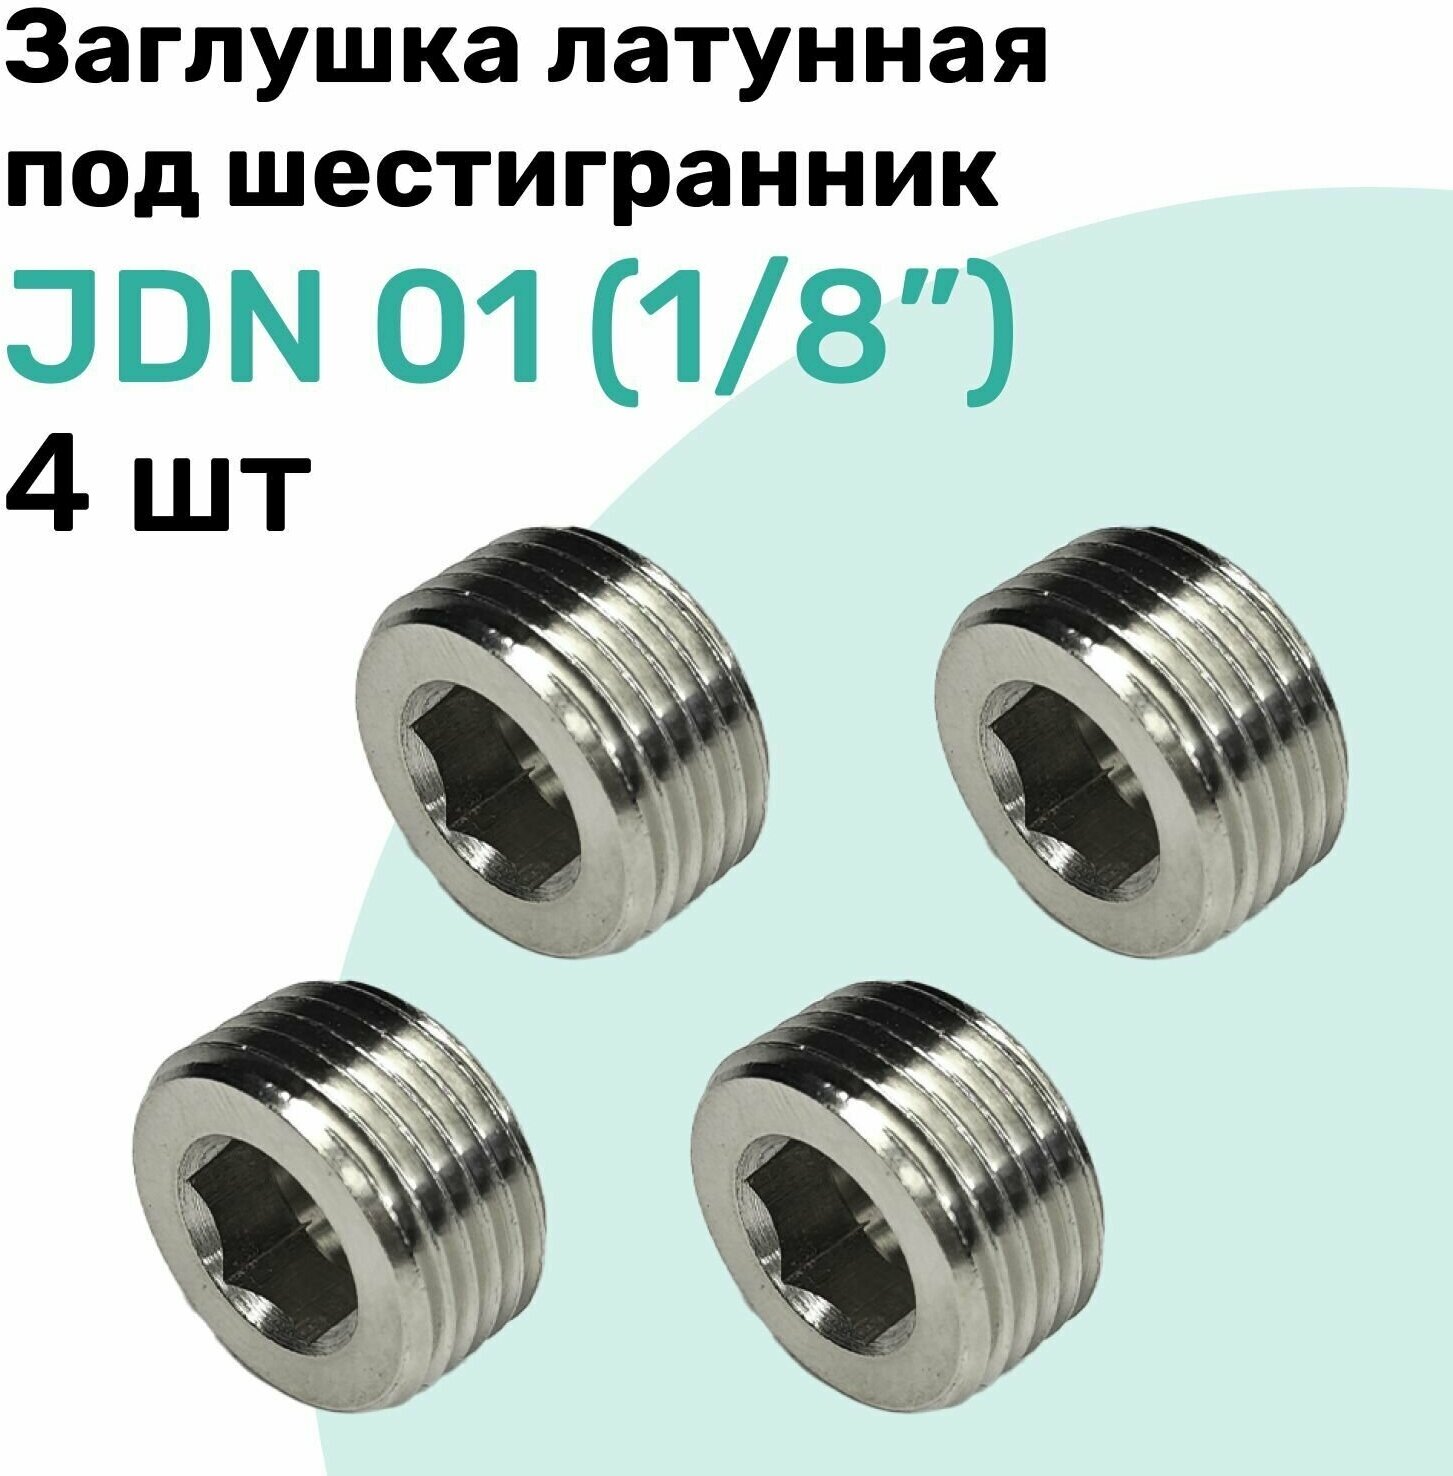 Заглушка латунная под шестигранник JDN 01 (R1/8"), Пневмозаглушка NBPT, Набор 4шт